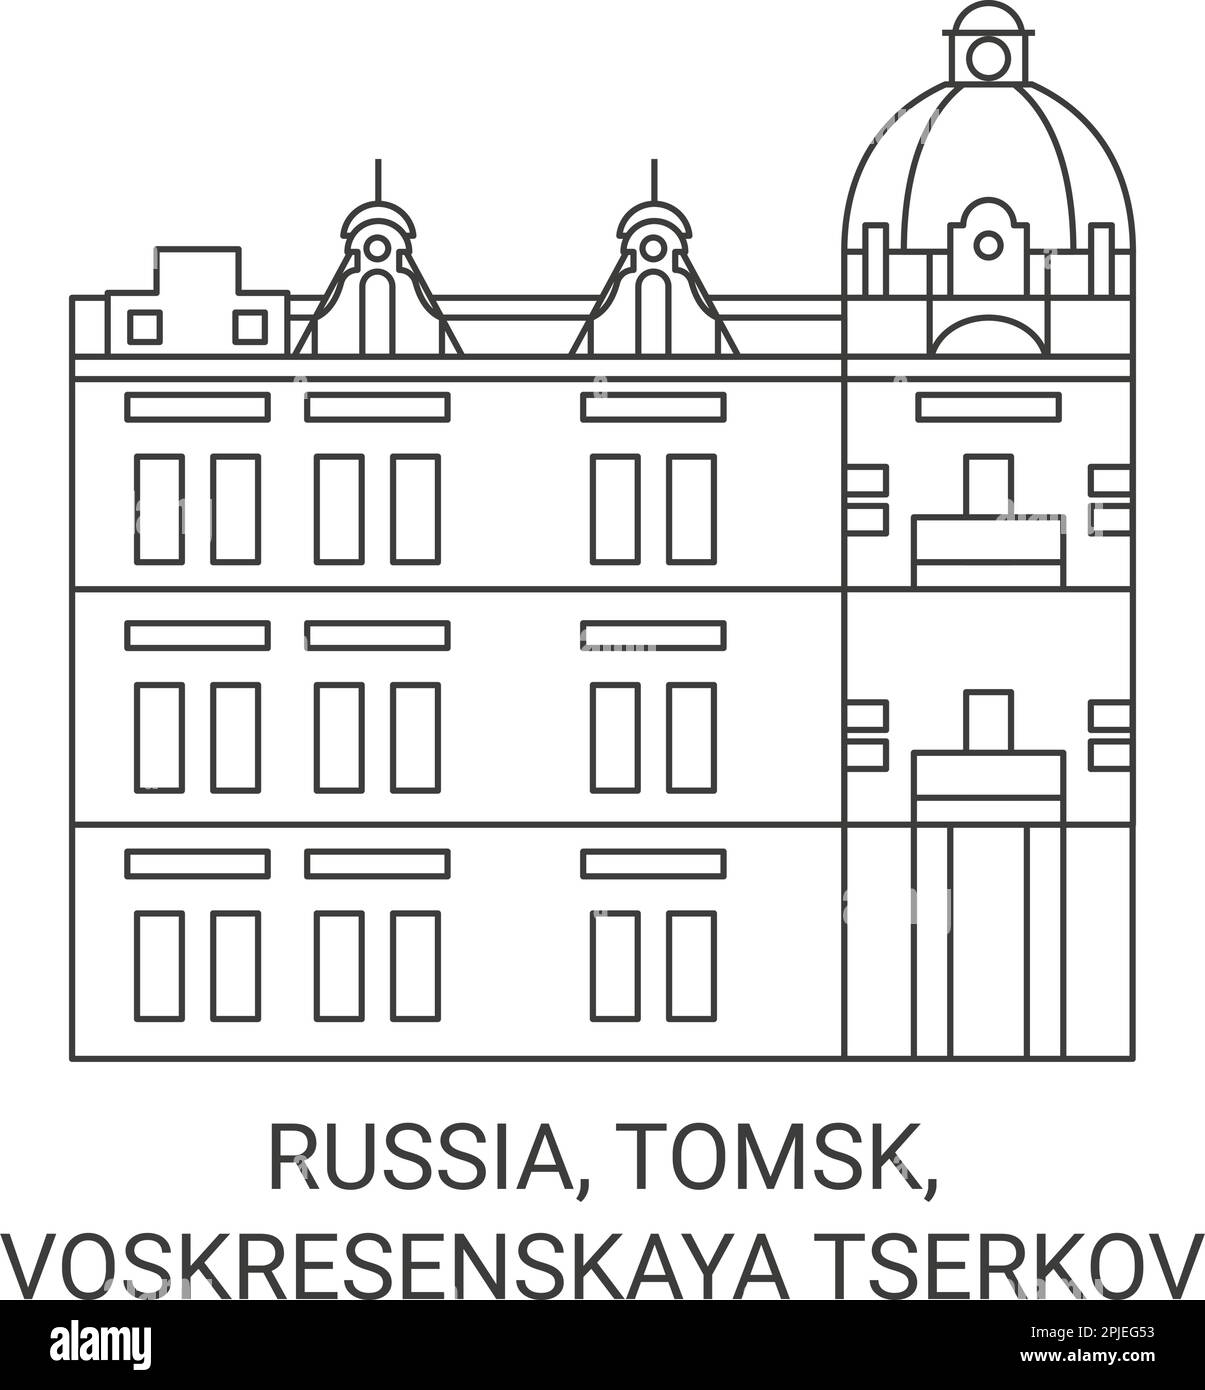 Russia, Tomsk, Voskresenskaya Tserkov travel landmark vector illustration Stock Vector